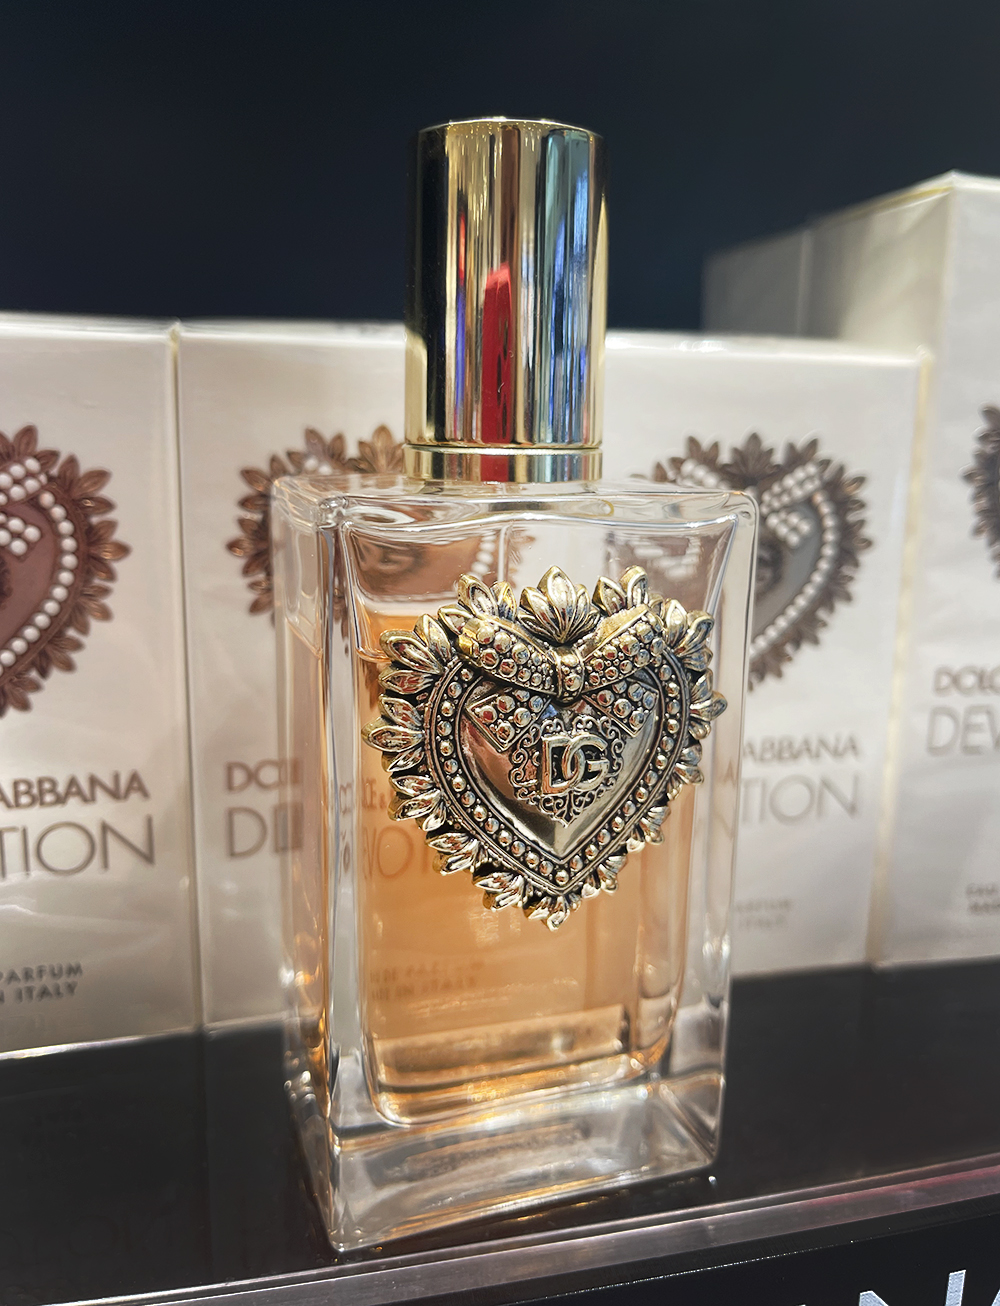 Dolce Gabbana Devotion. Devotion от Dolce&Gabbanа. Devotion от Dolce&Gabbanа 100 мл. Дольче Габбана девотион 10 миллилитров.